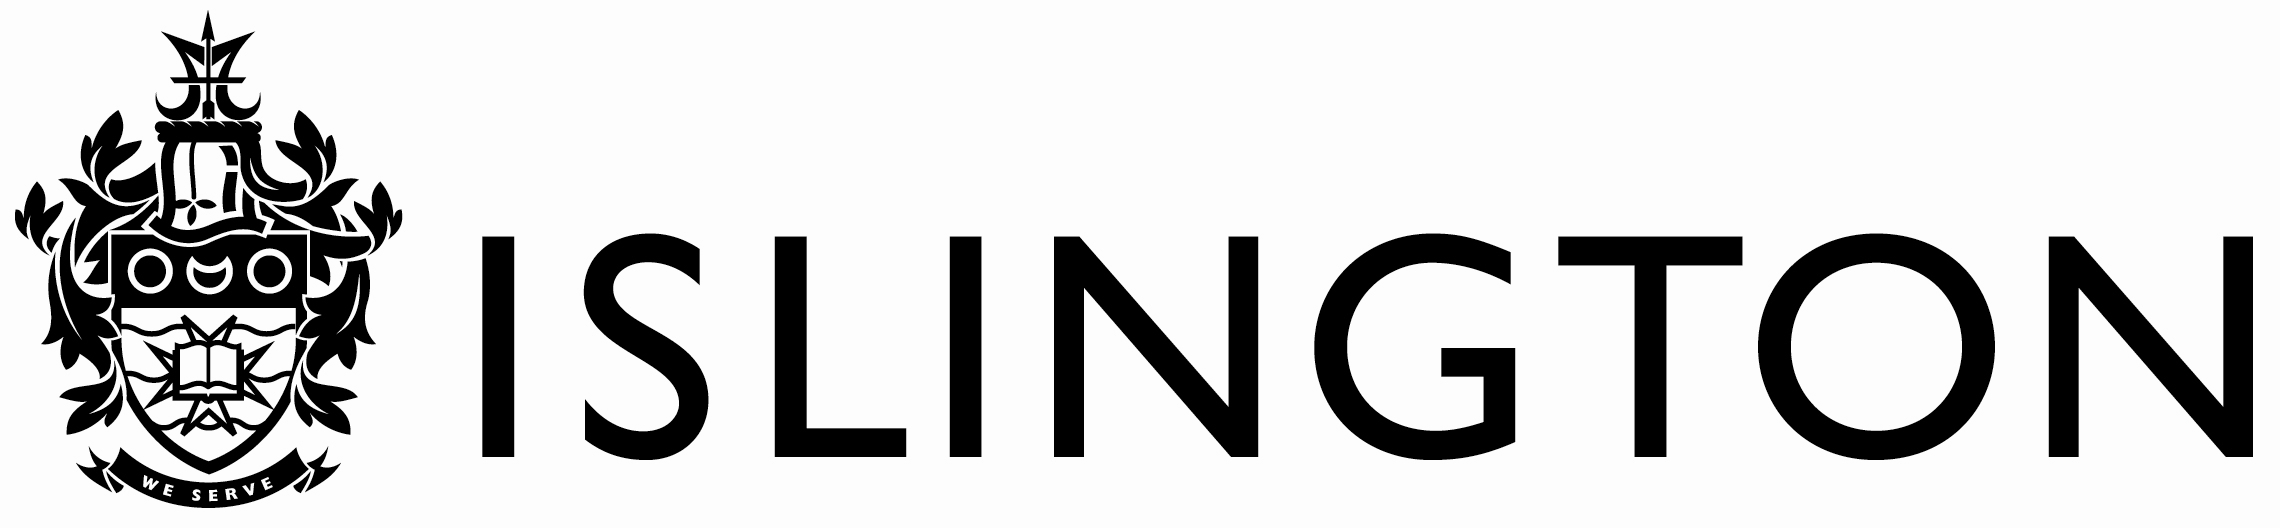 London Borough of Islington Council